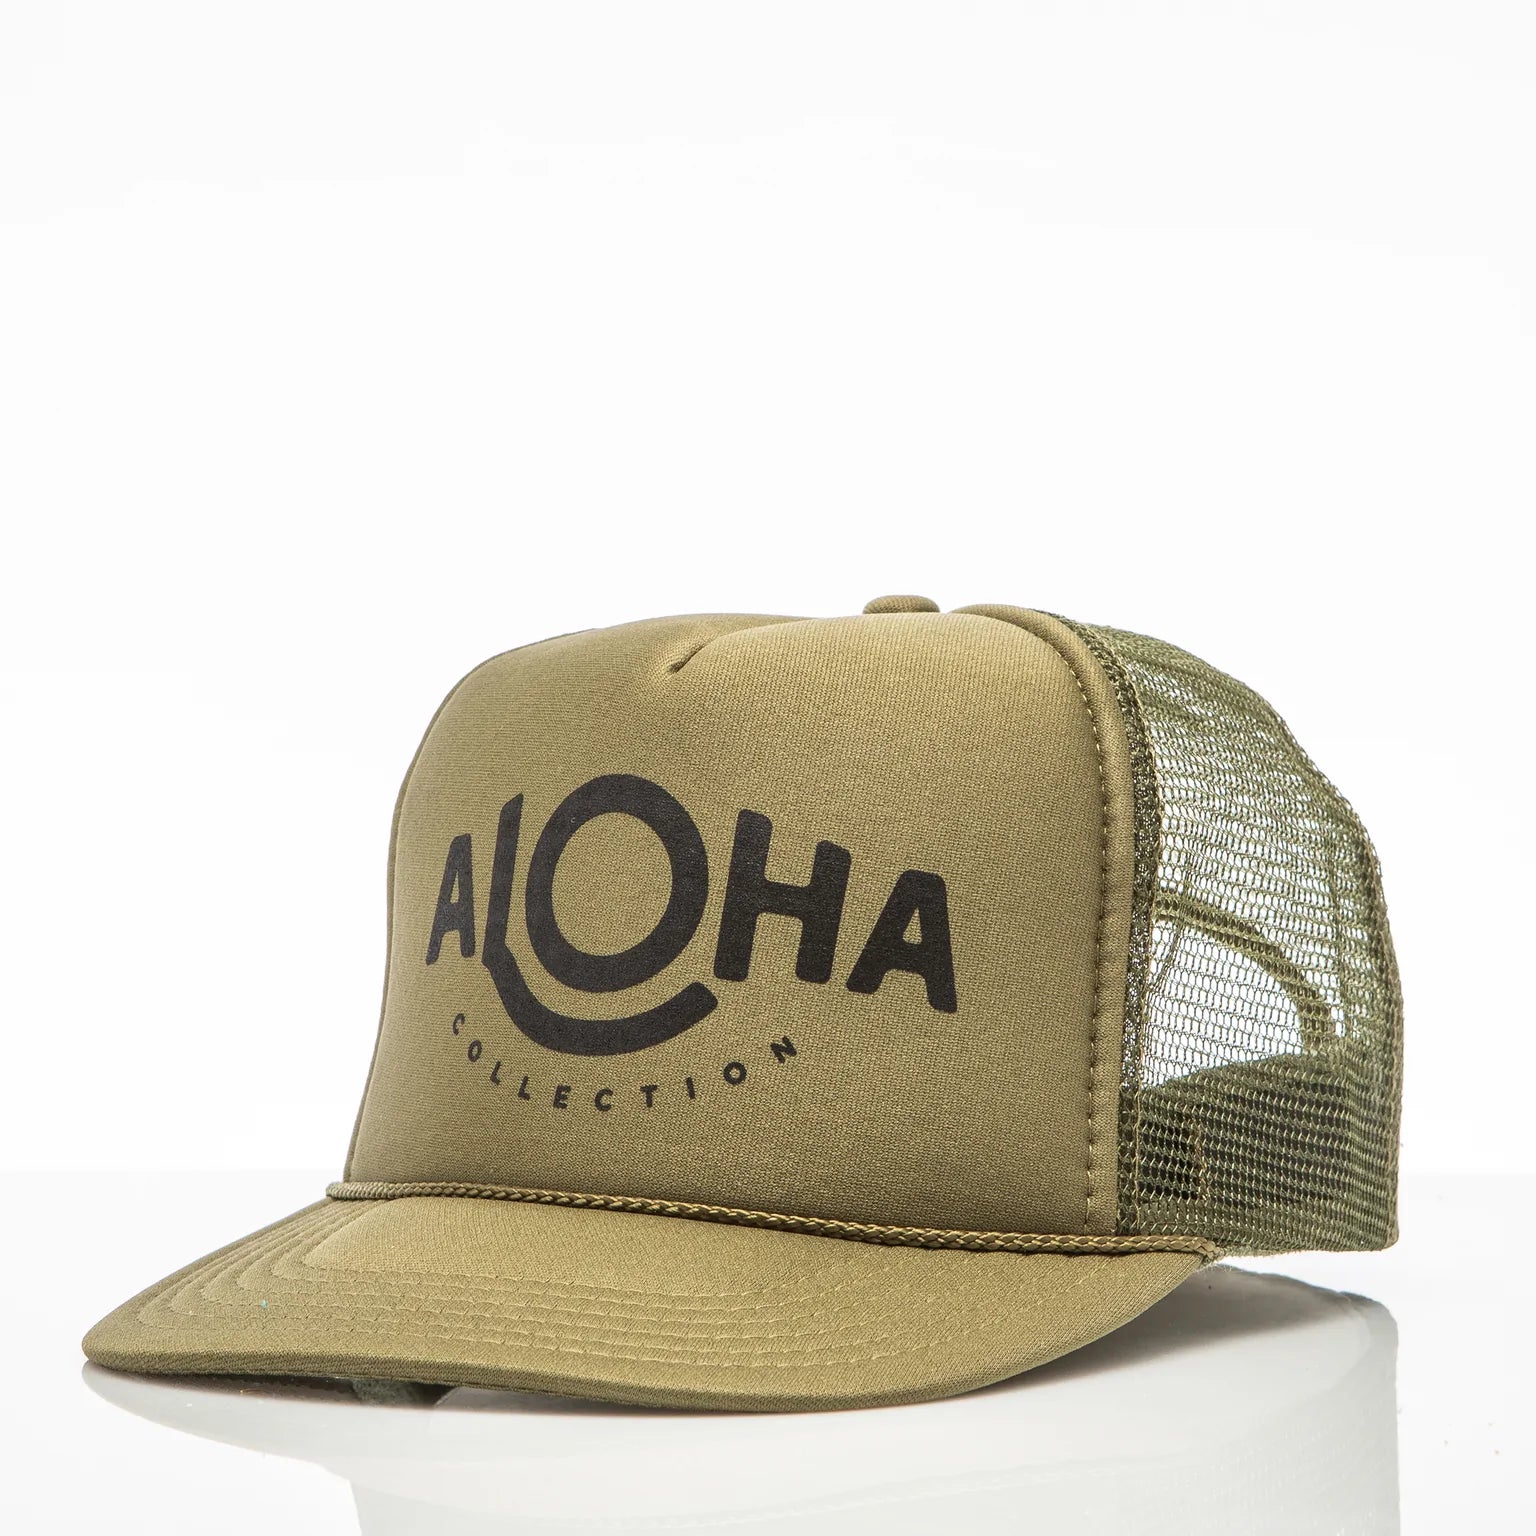 Aloha Collection Trucker Hats